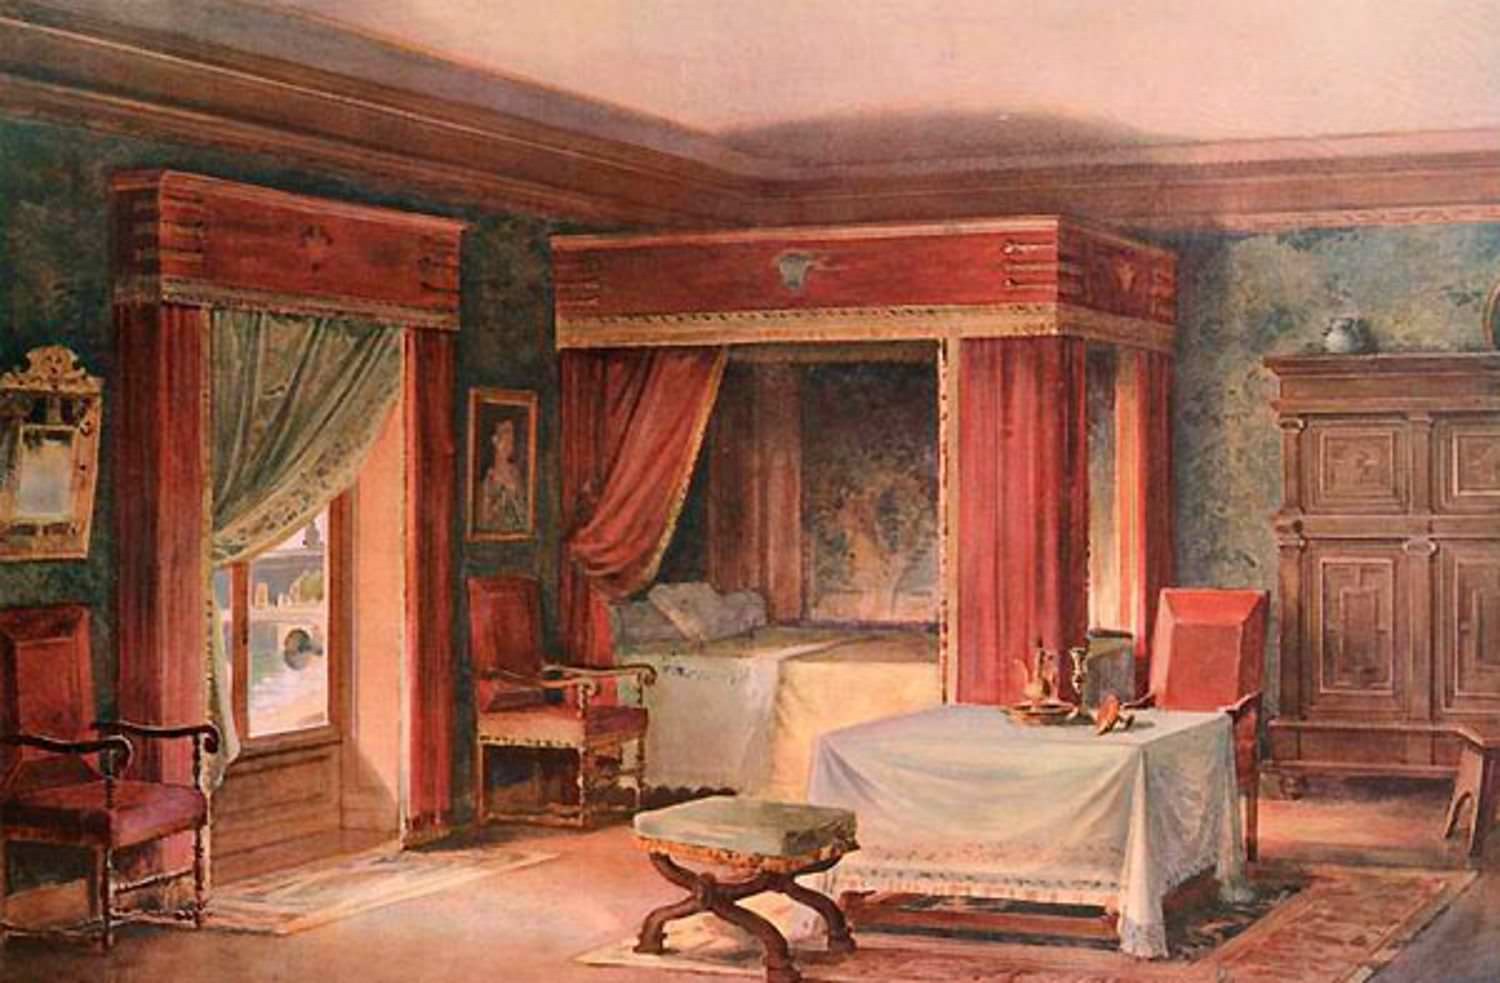 Спальня 17 века дворянин